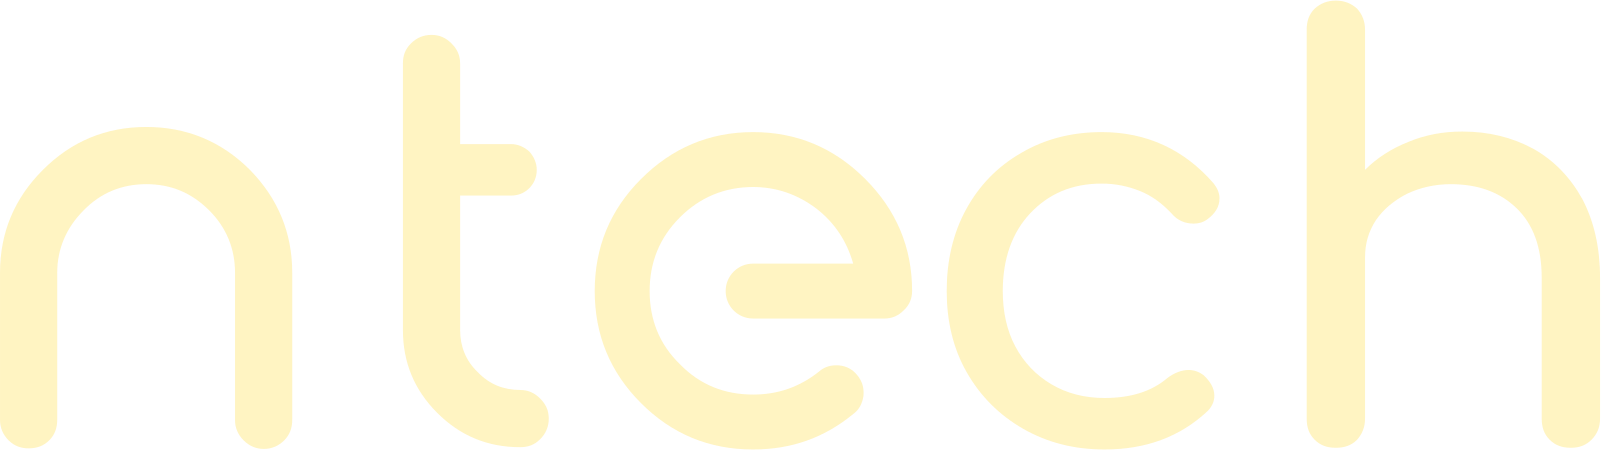 2022 ntech logo hvitgul